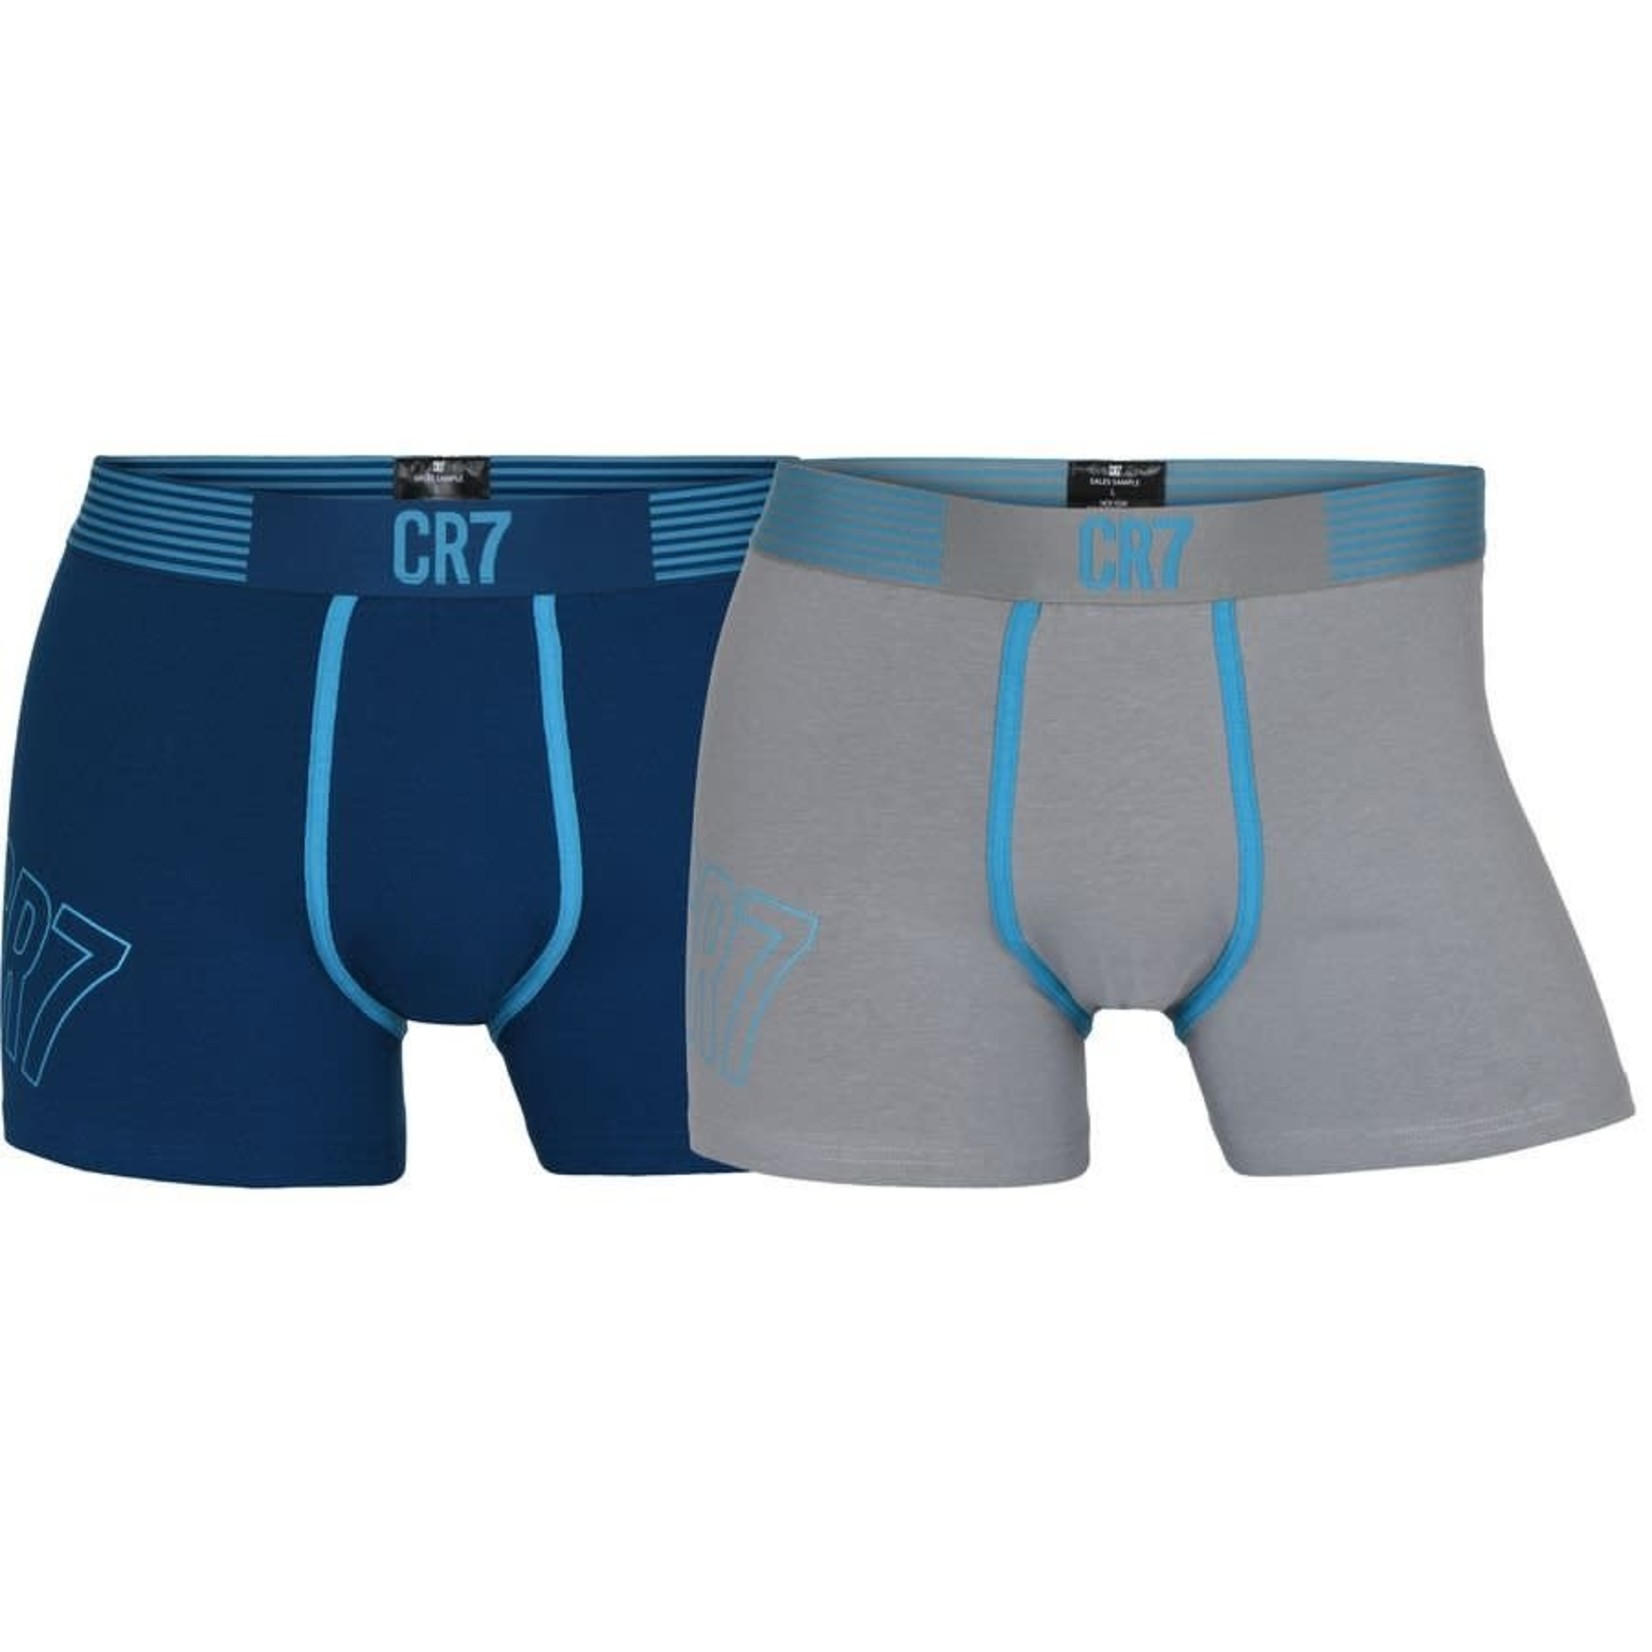 CR7 Boxer Underwear 2-Pack - Blue/Grey Adult